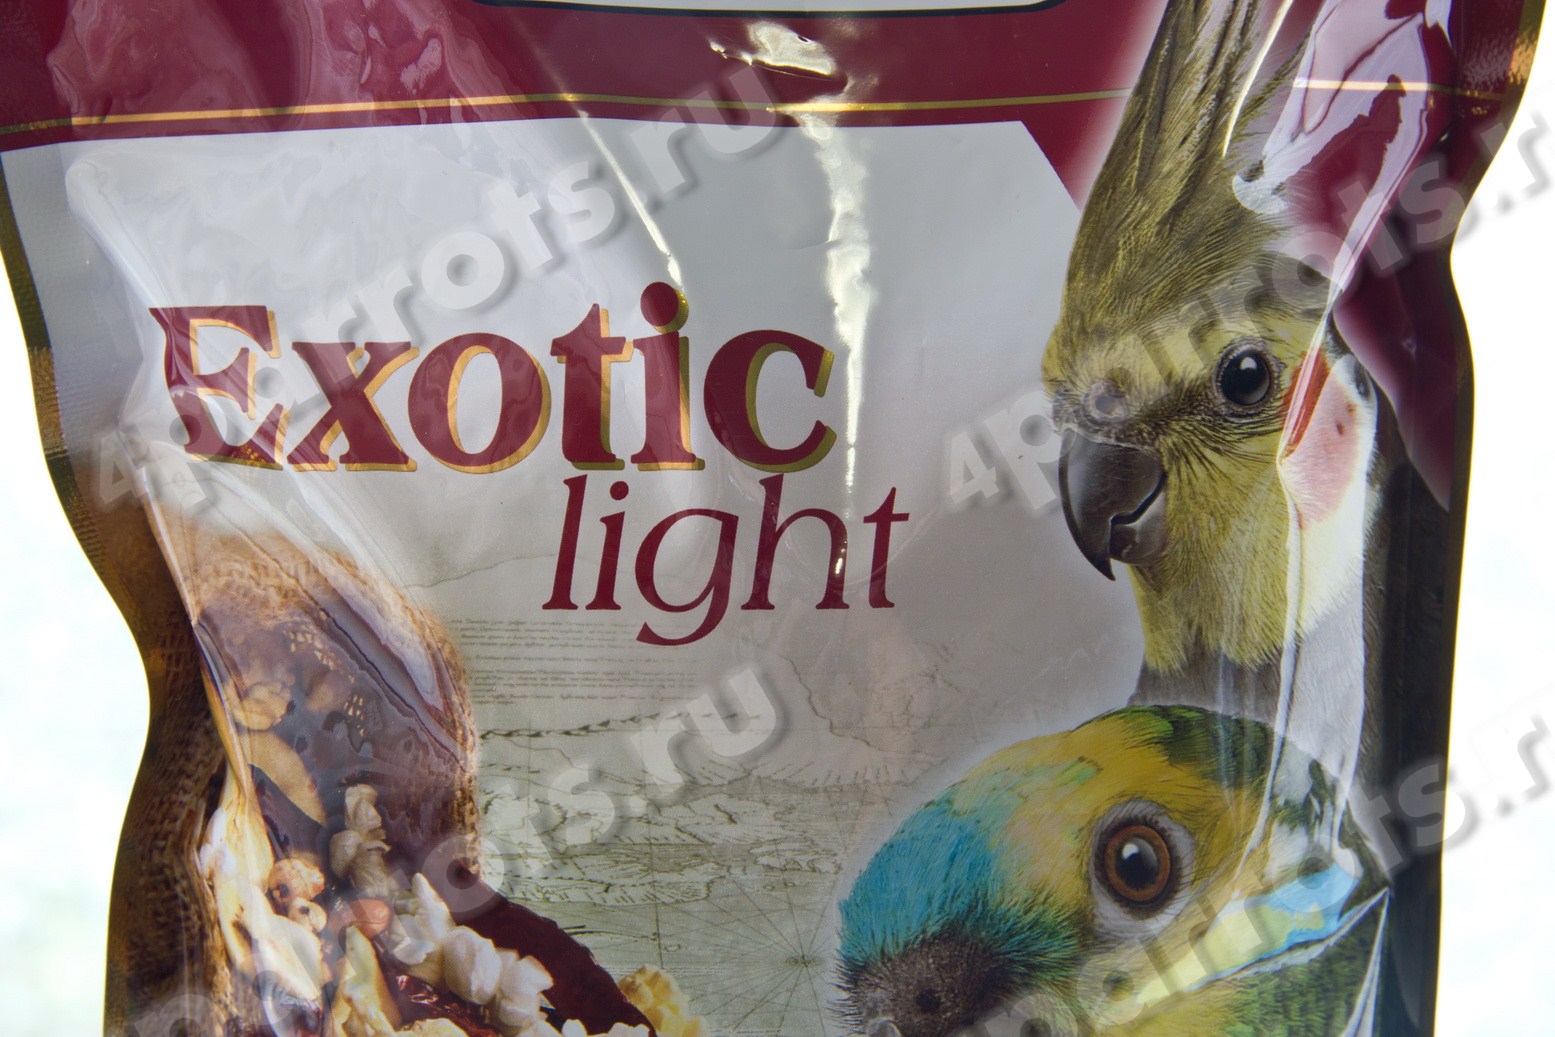 фото корма для попугаев Exotic Light1